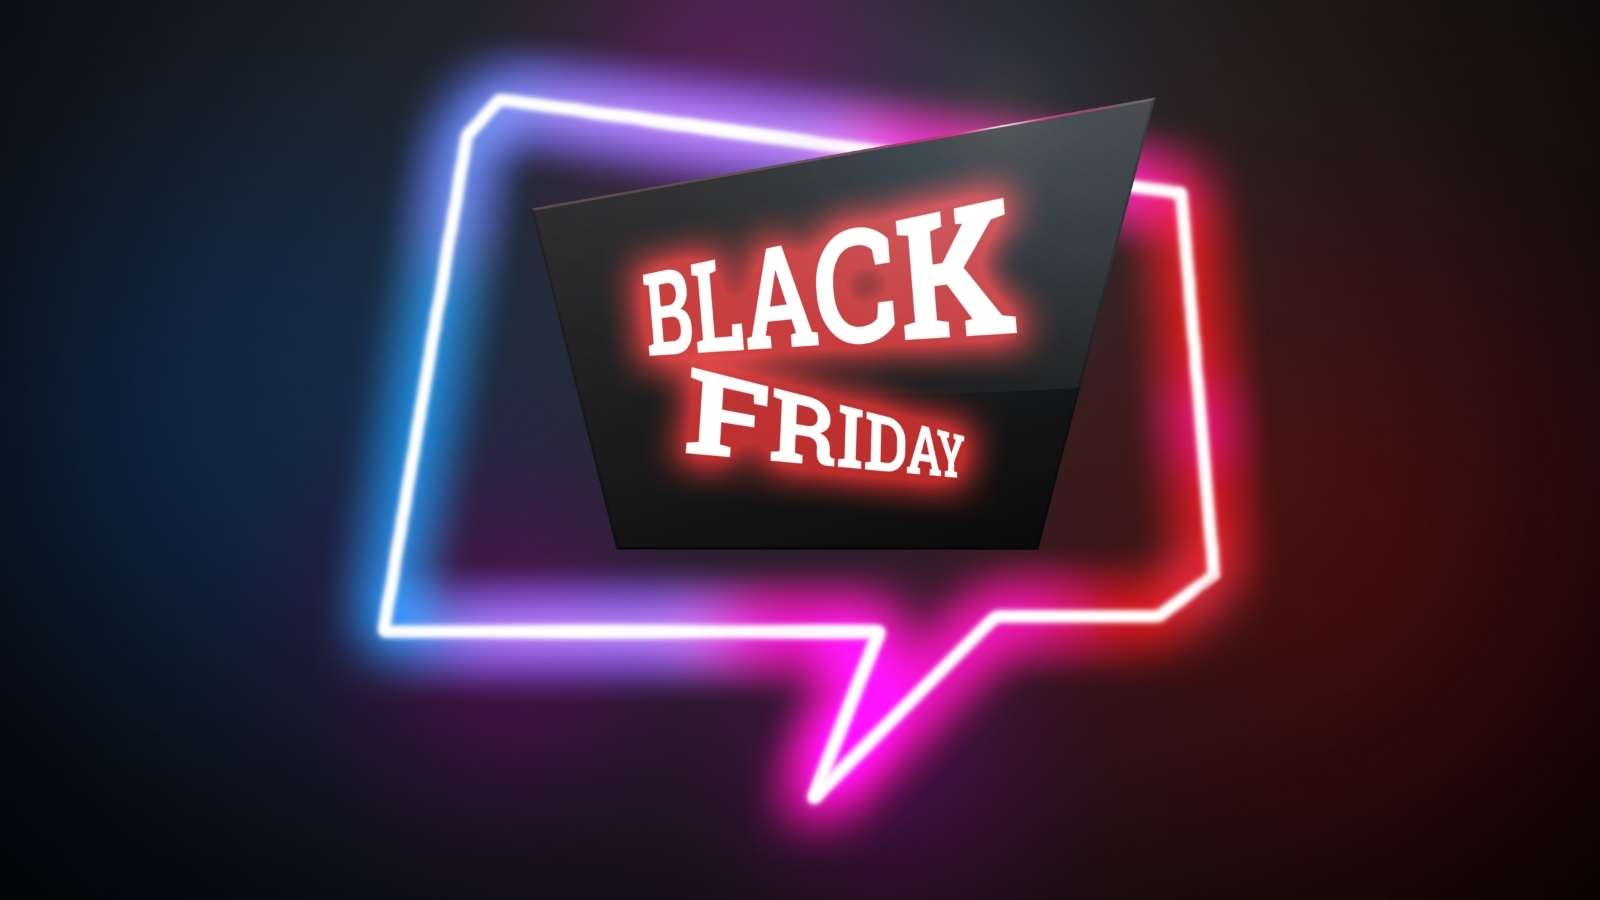 Black Friday & Cyber Monday creative marketing ideas